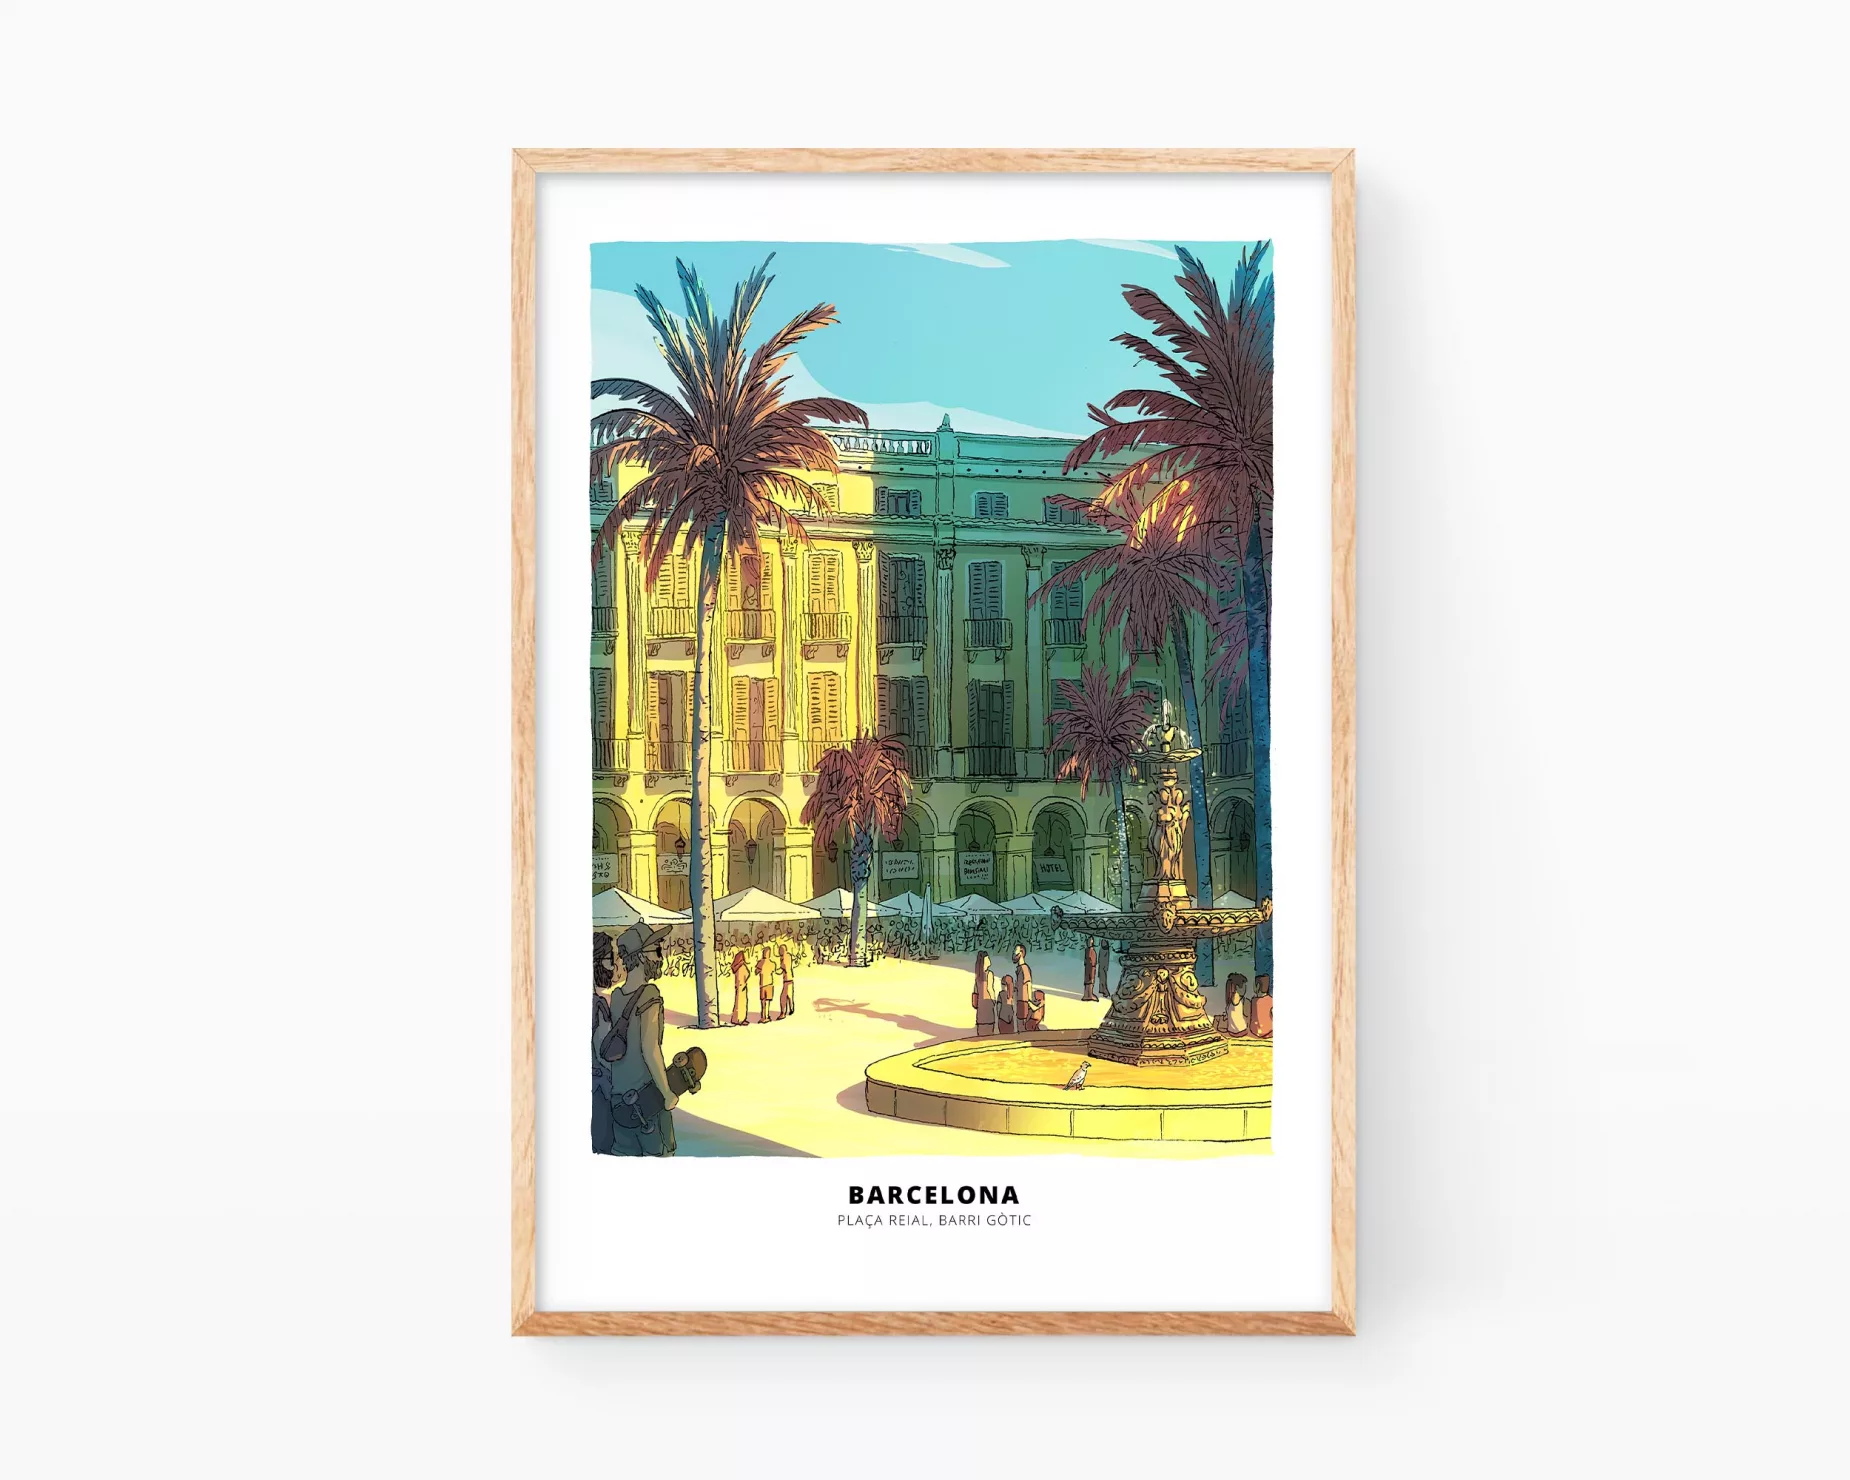 Lámina en color dibujo Barcelona Plaça reial, Famosas vistas de España